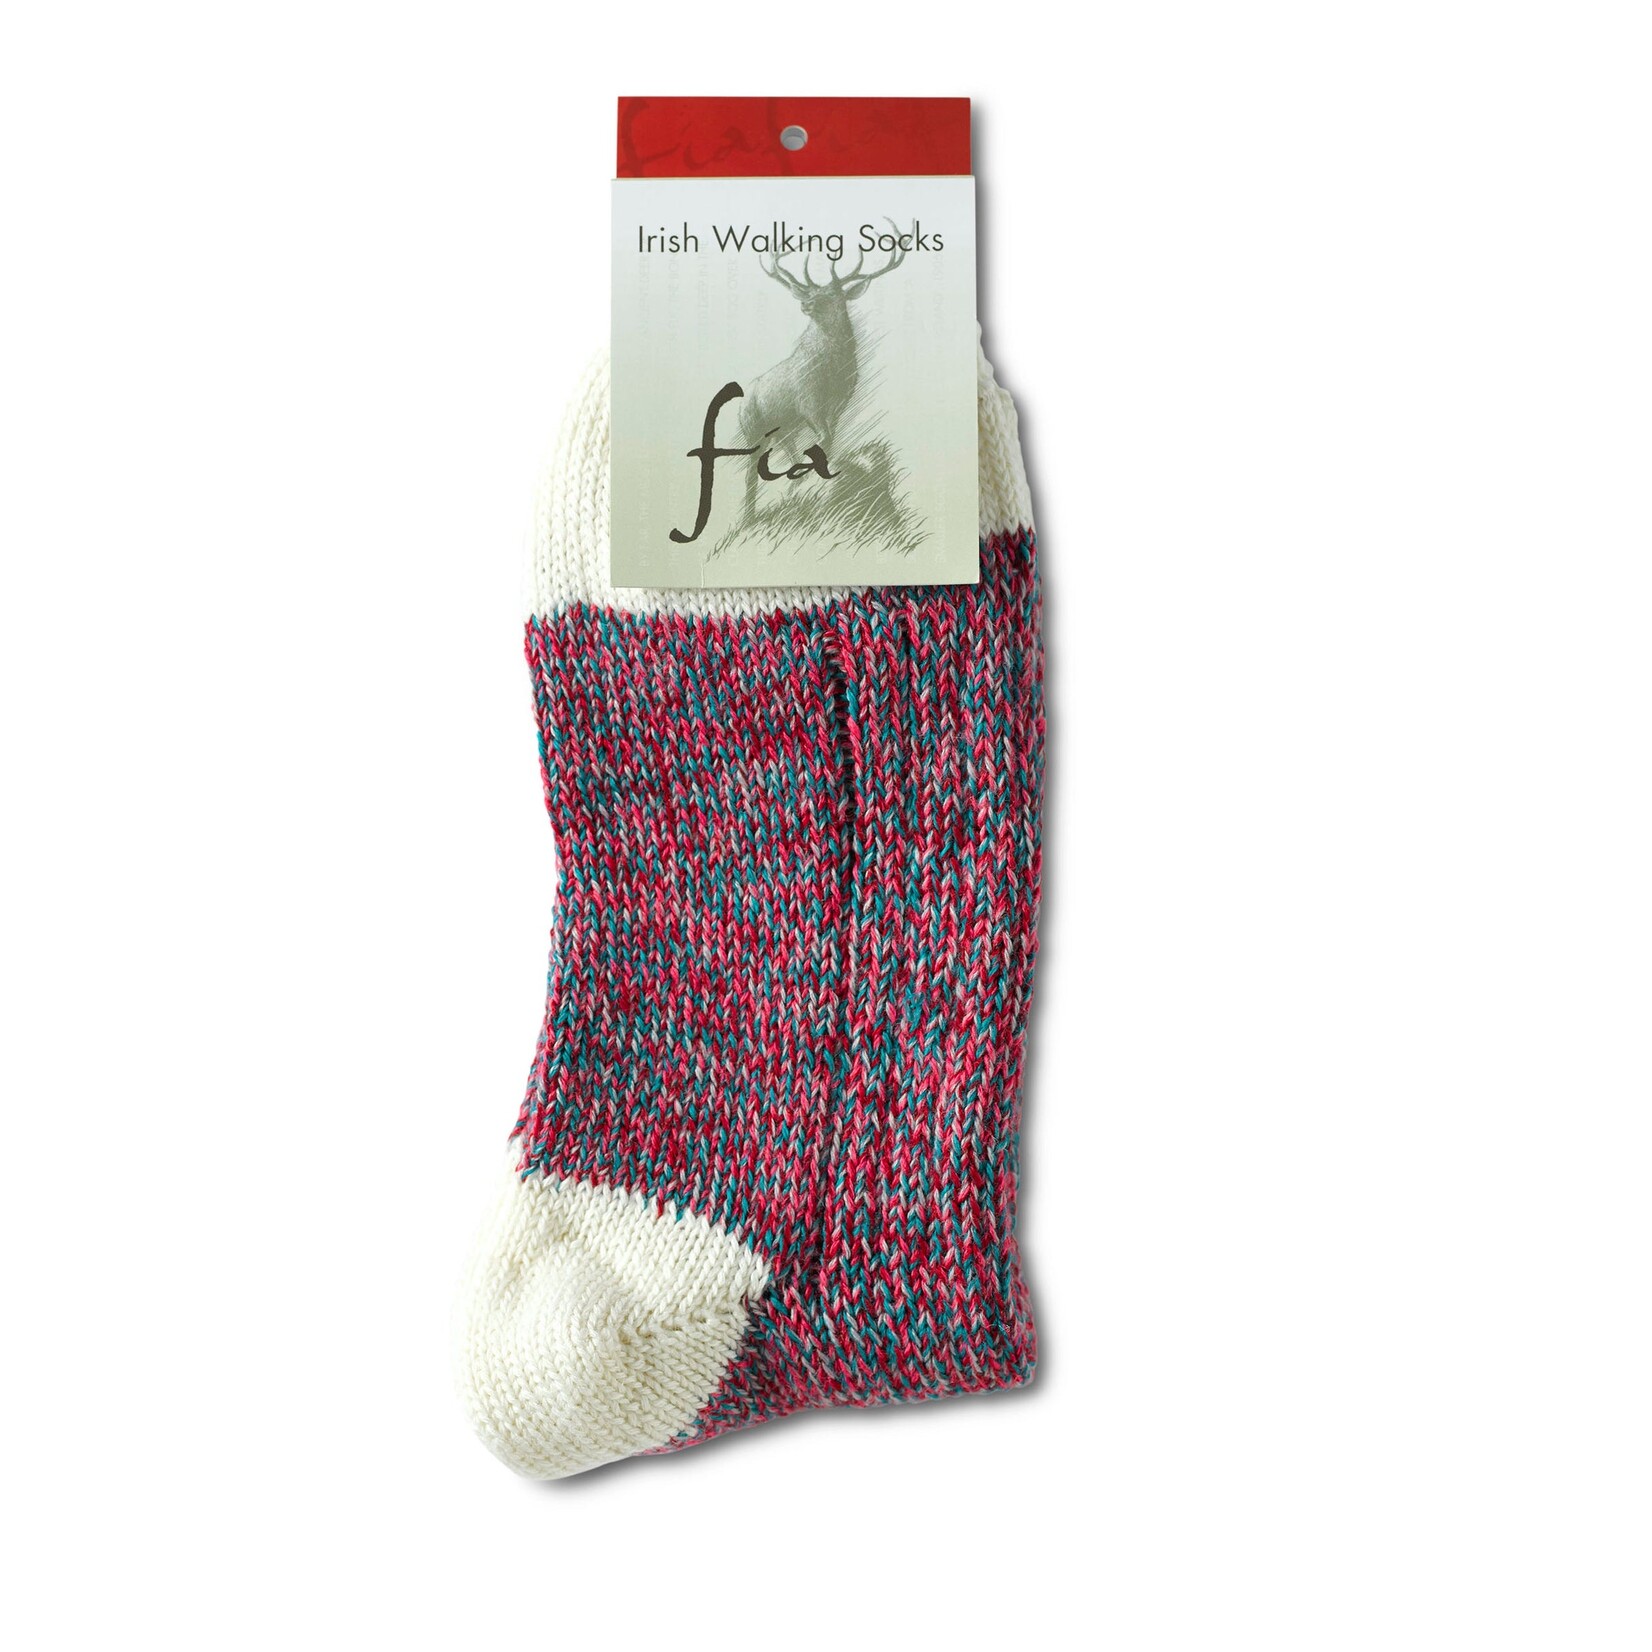 Fia Fia Wool Socks with White Top - Medium